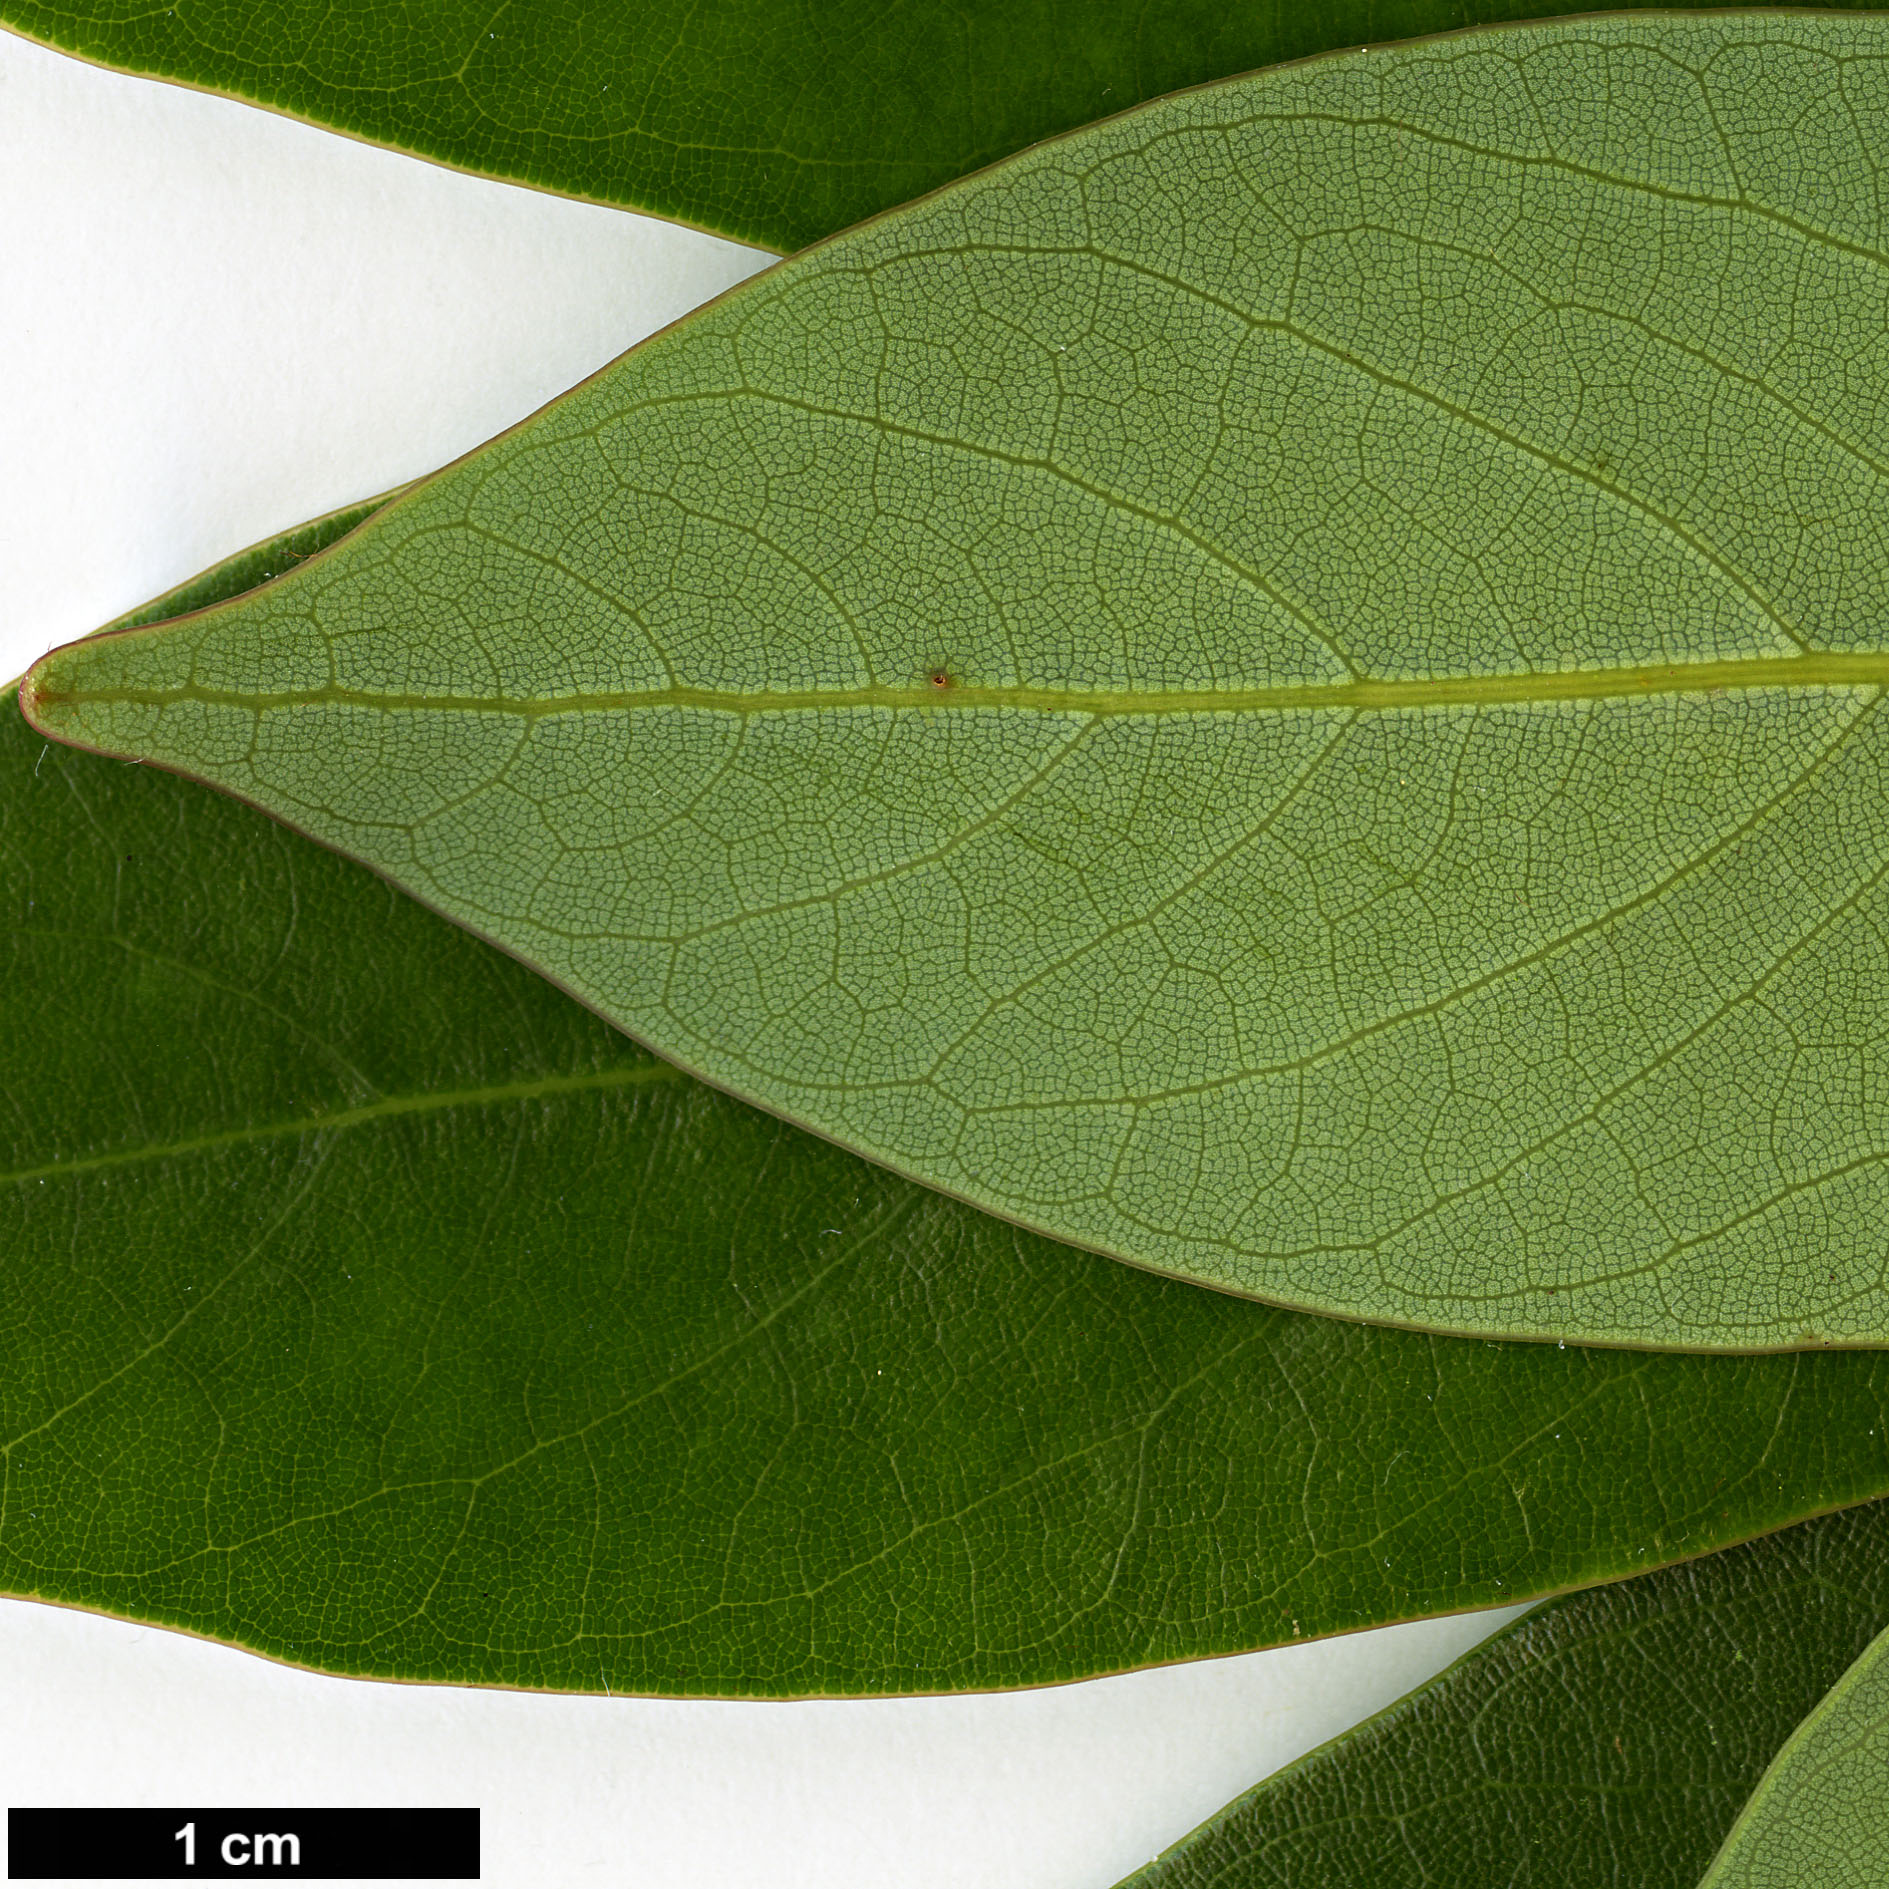 High resolution image: Family: Lauraceae - Genus: Machilus - Taxon: thunbergii